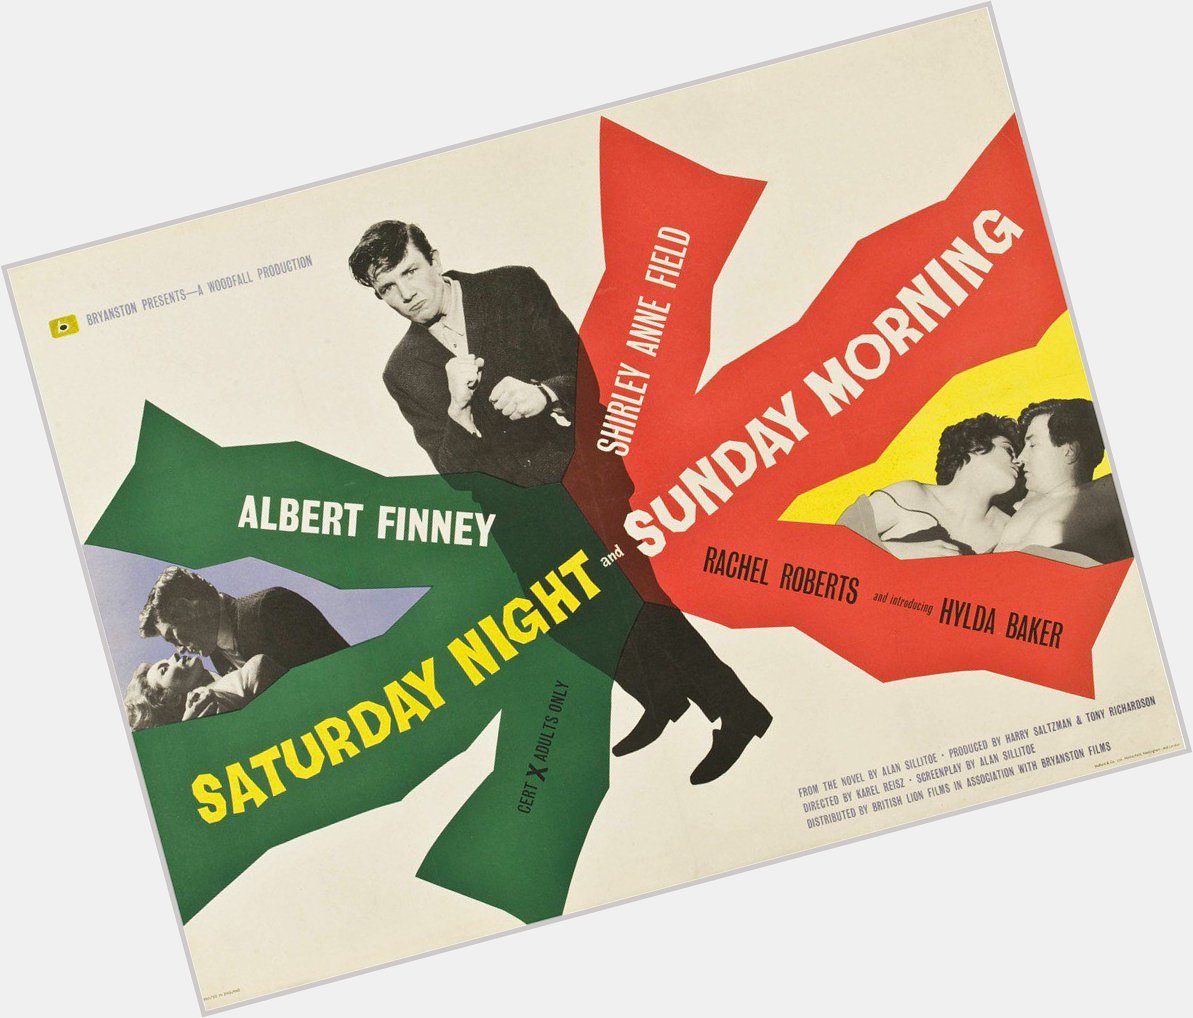 Happy birthday to Albert Finney - SATURDAY NIGHT AND SUNDAY MORNING - 1960 - UK release poster 